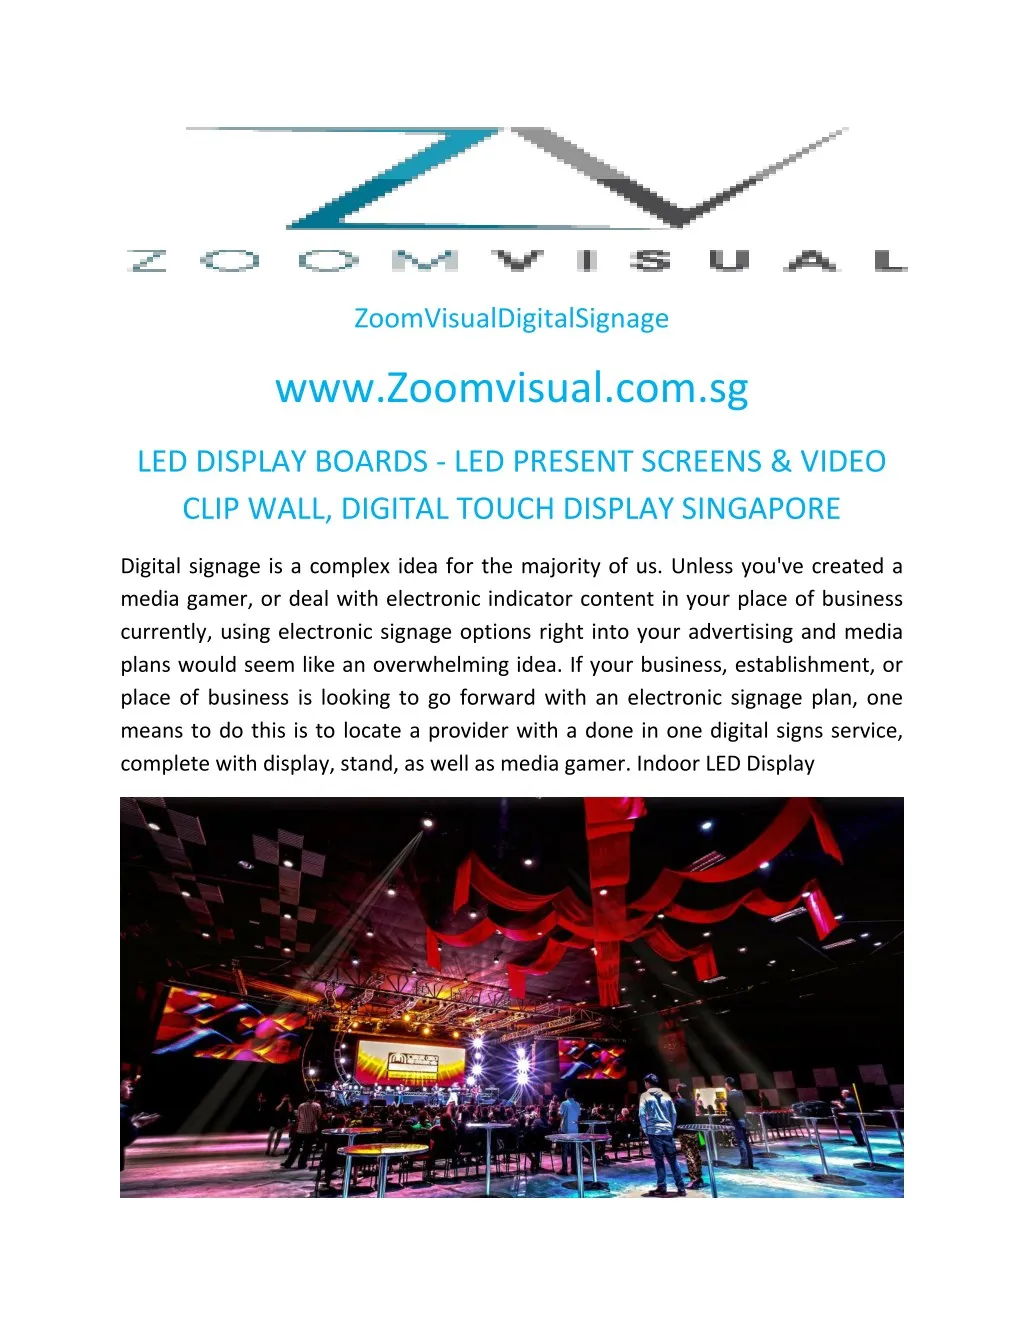 zoomvisualdigitalsignage